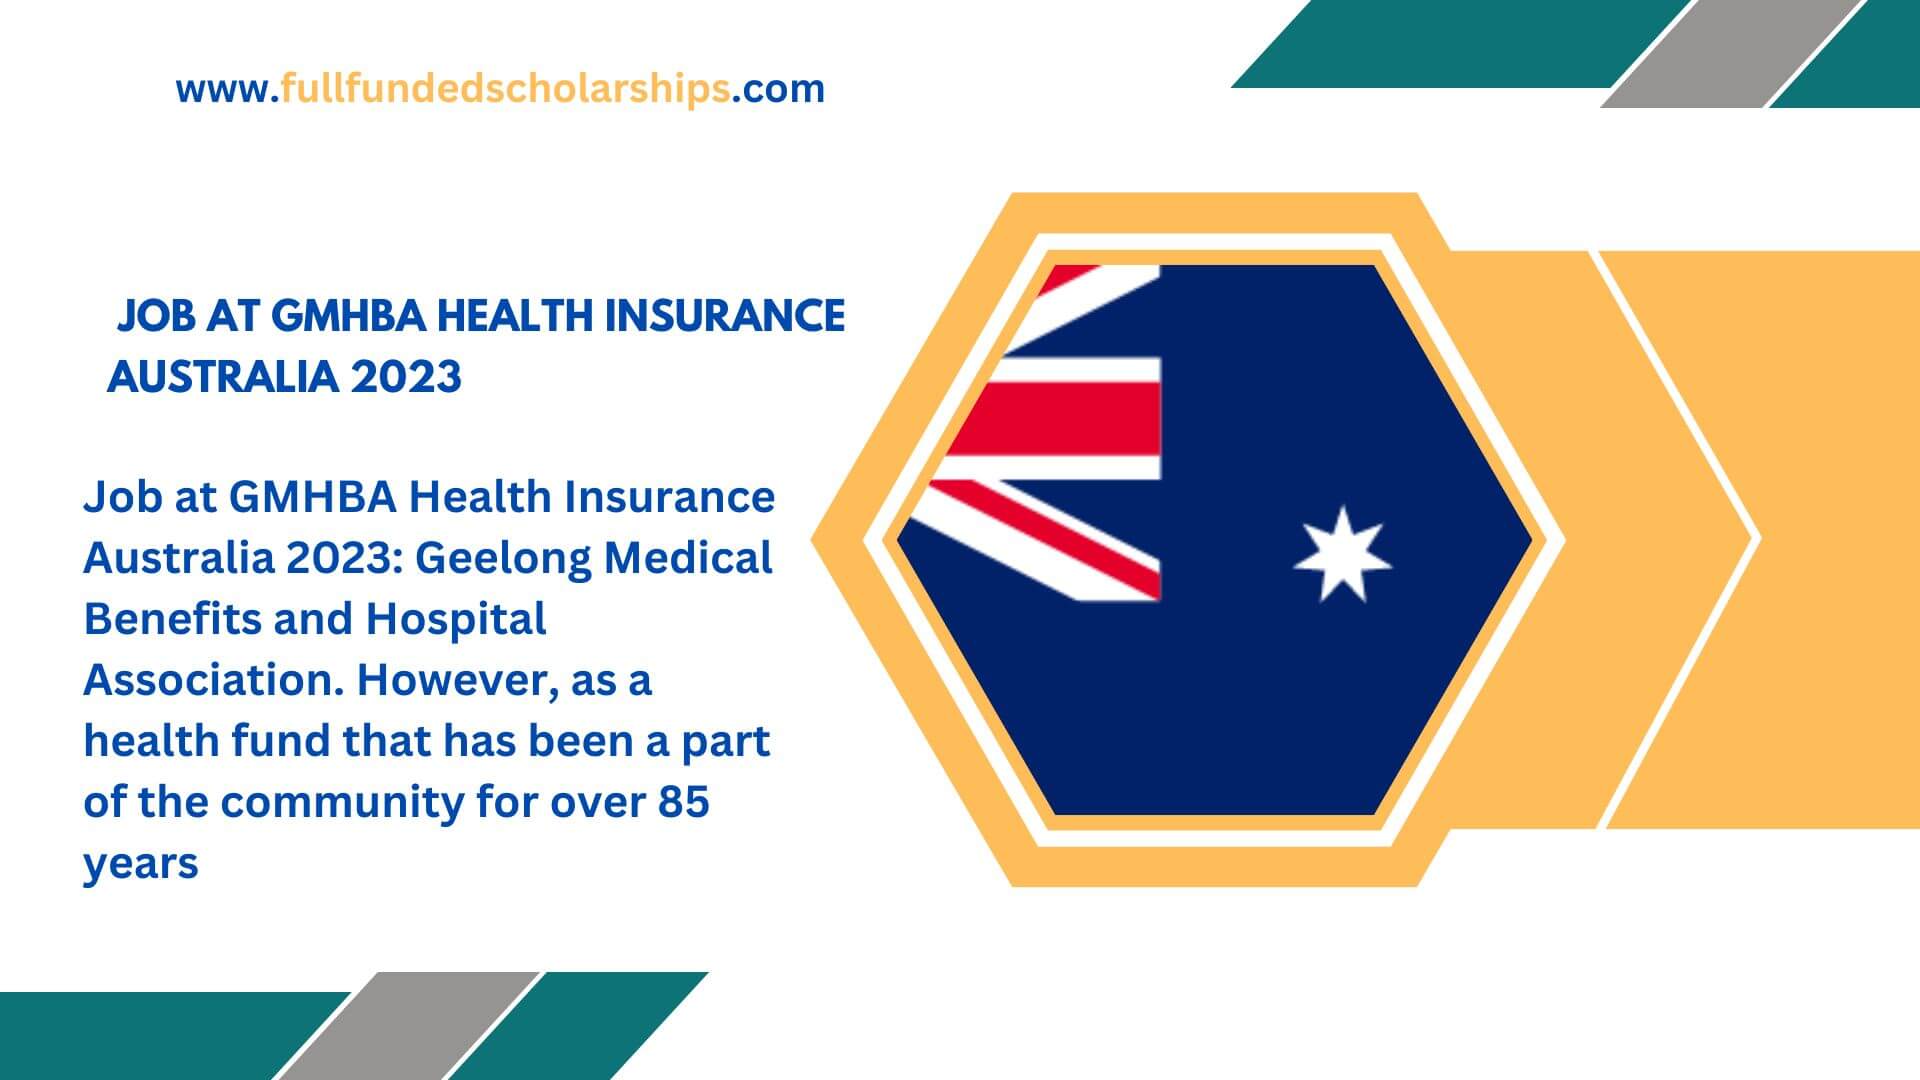  Job at GMHBA Health Insurance Australia 2023